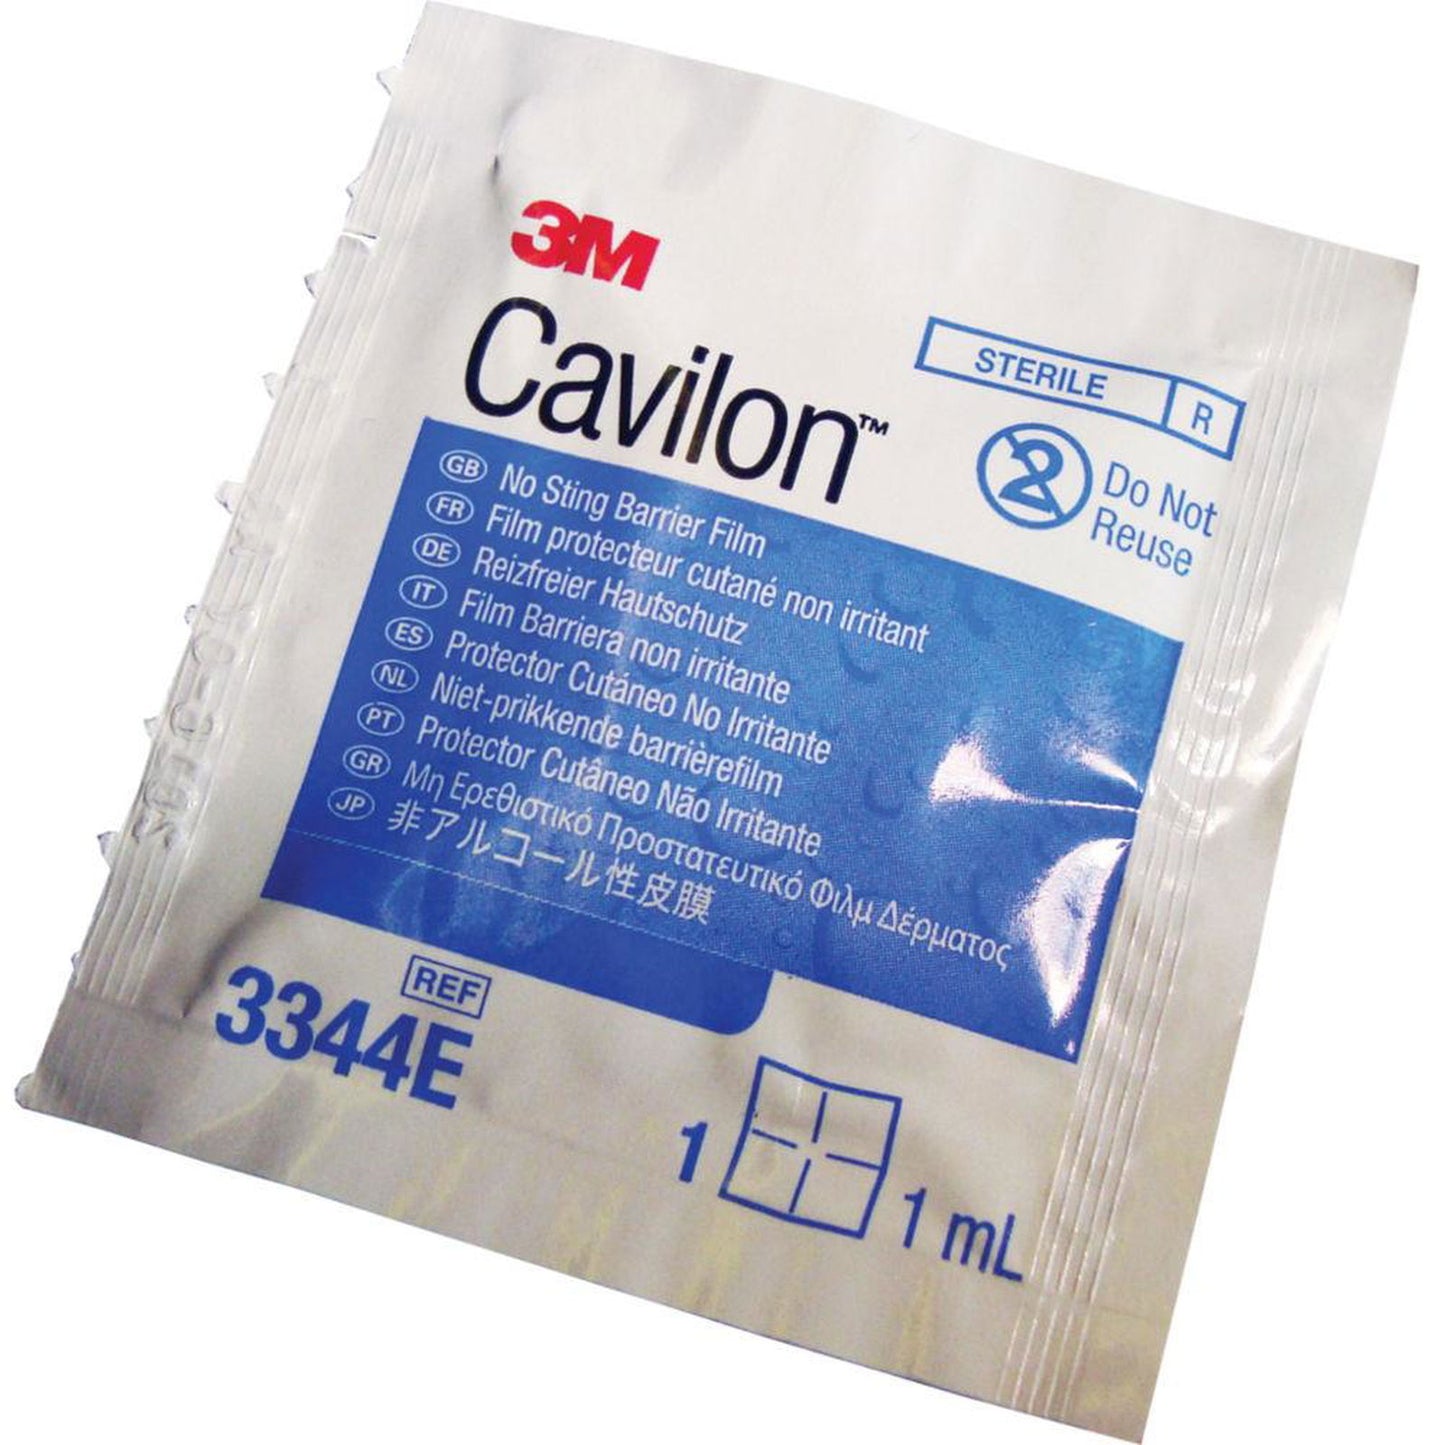 Cavilon Stoma Alcohol Free Wipes 3344E - EasyMeds Pharmacy